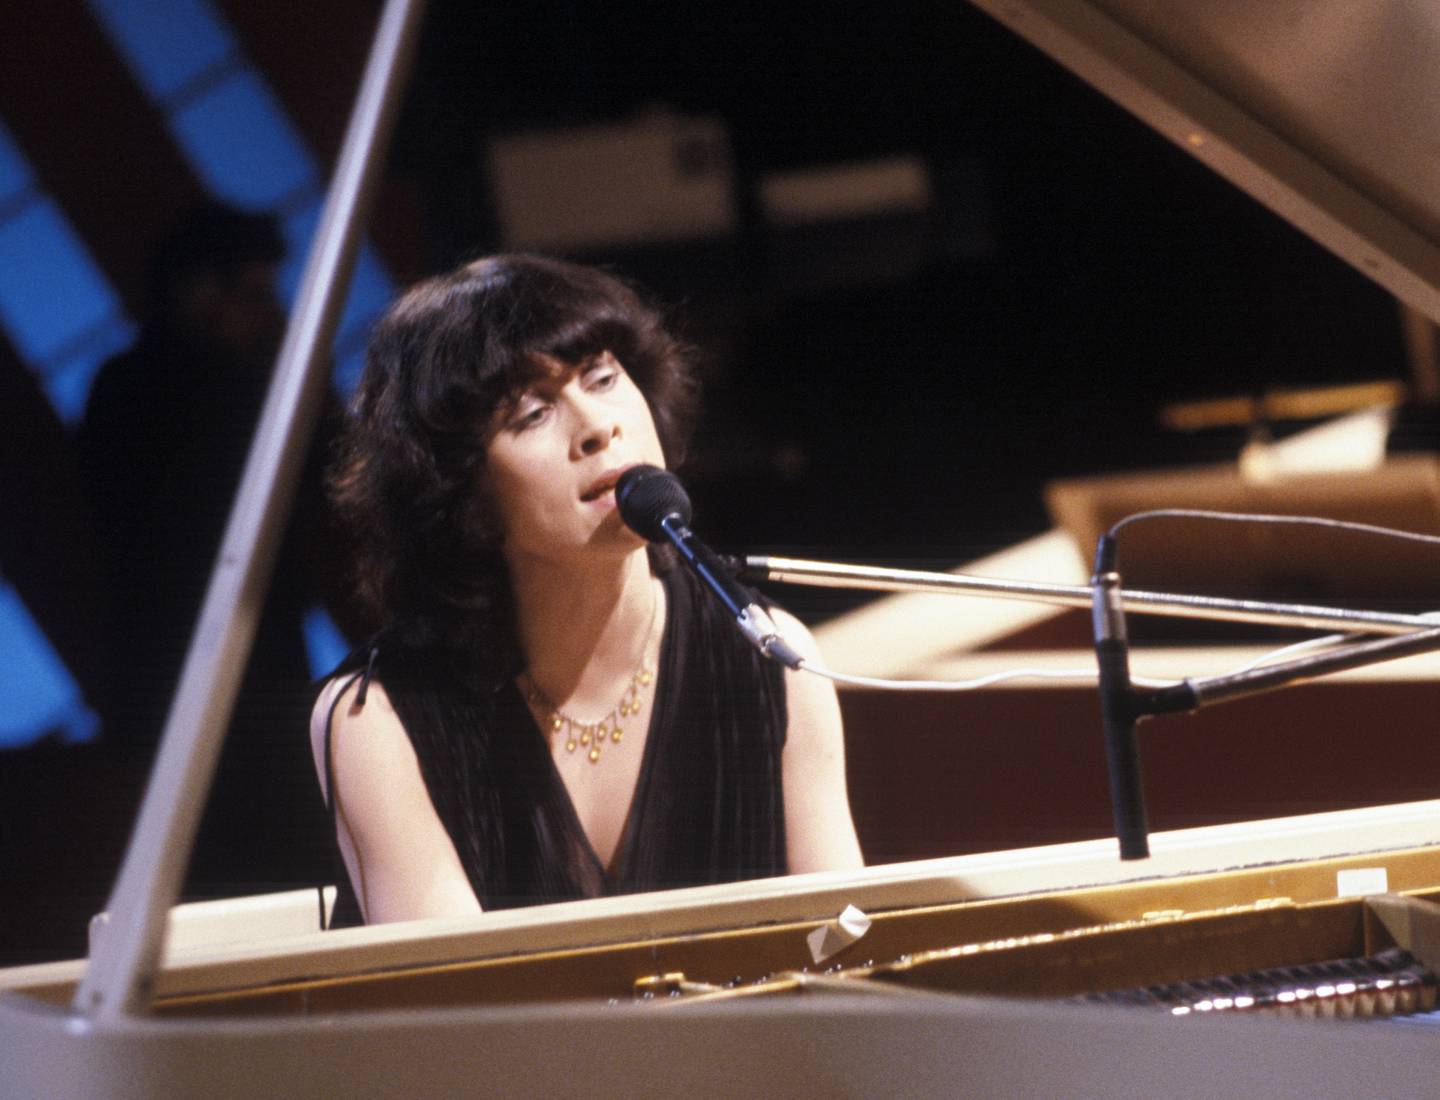 Oslo 19800322
Melodi Grand Prix , norsk finale. Radka Toneff ved pianoet. Hun fremfører sitt bidrag "Parken".
NTB arkivfoto  Paul Owesen / NTB